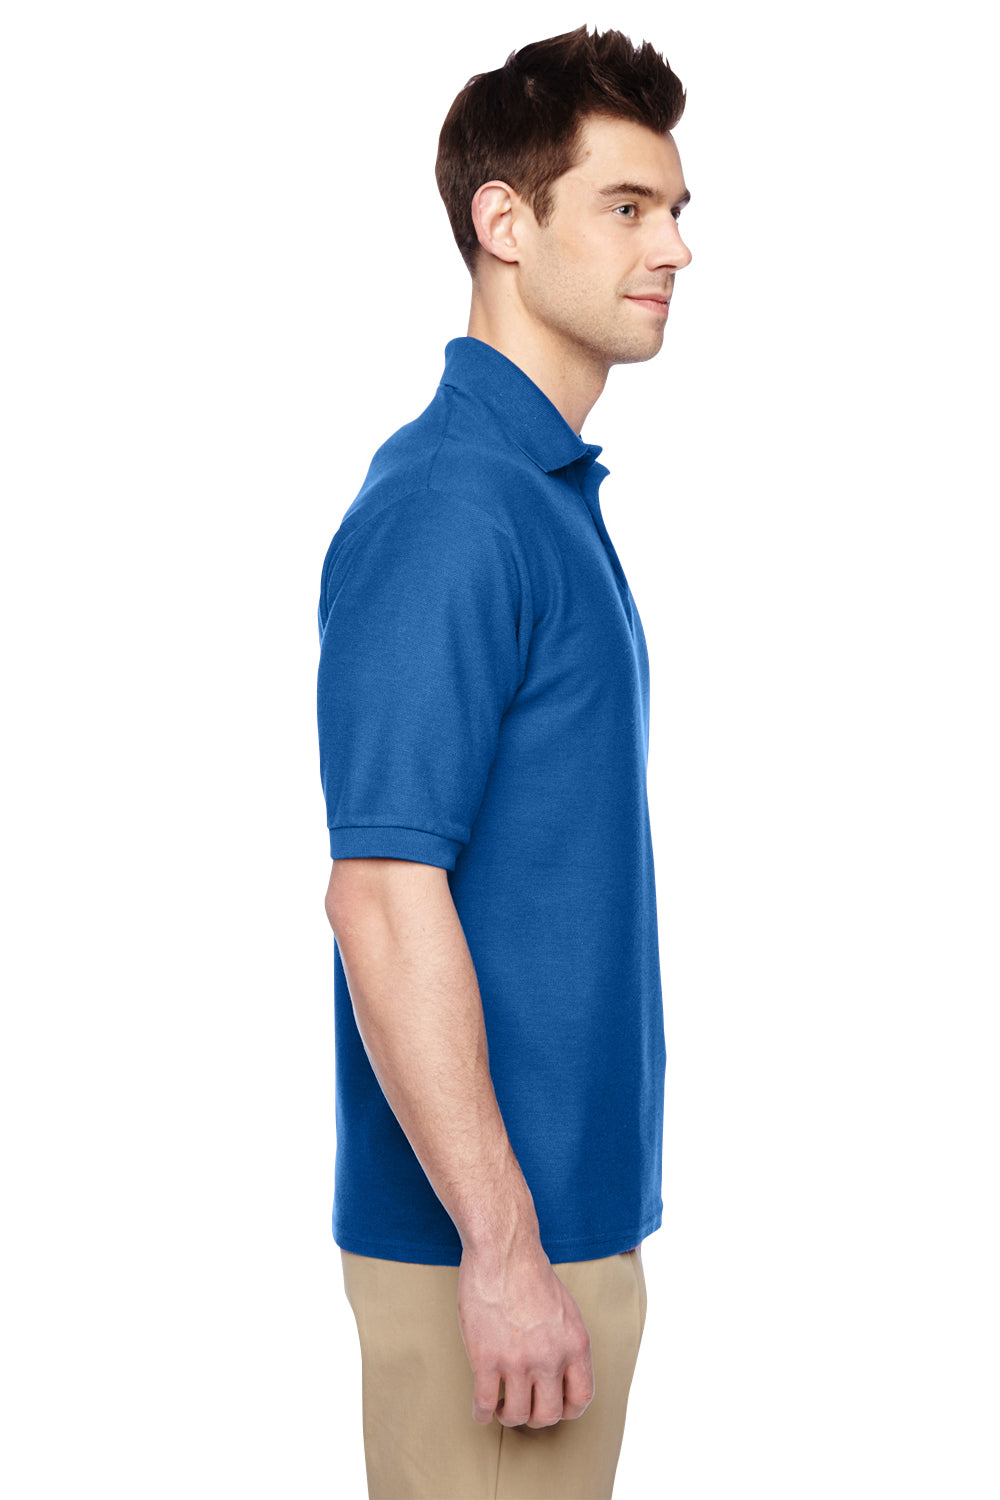 Jerzees 537MSR Mens Easy Care Moisture Wicking Short Sleeve Polo Shirt Royal Blue Side